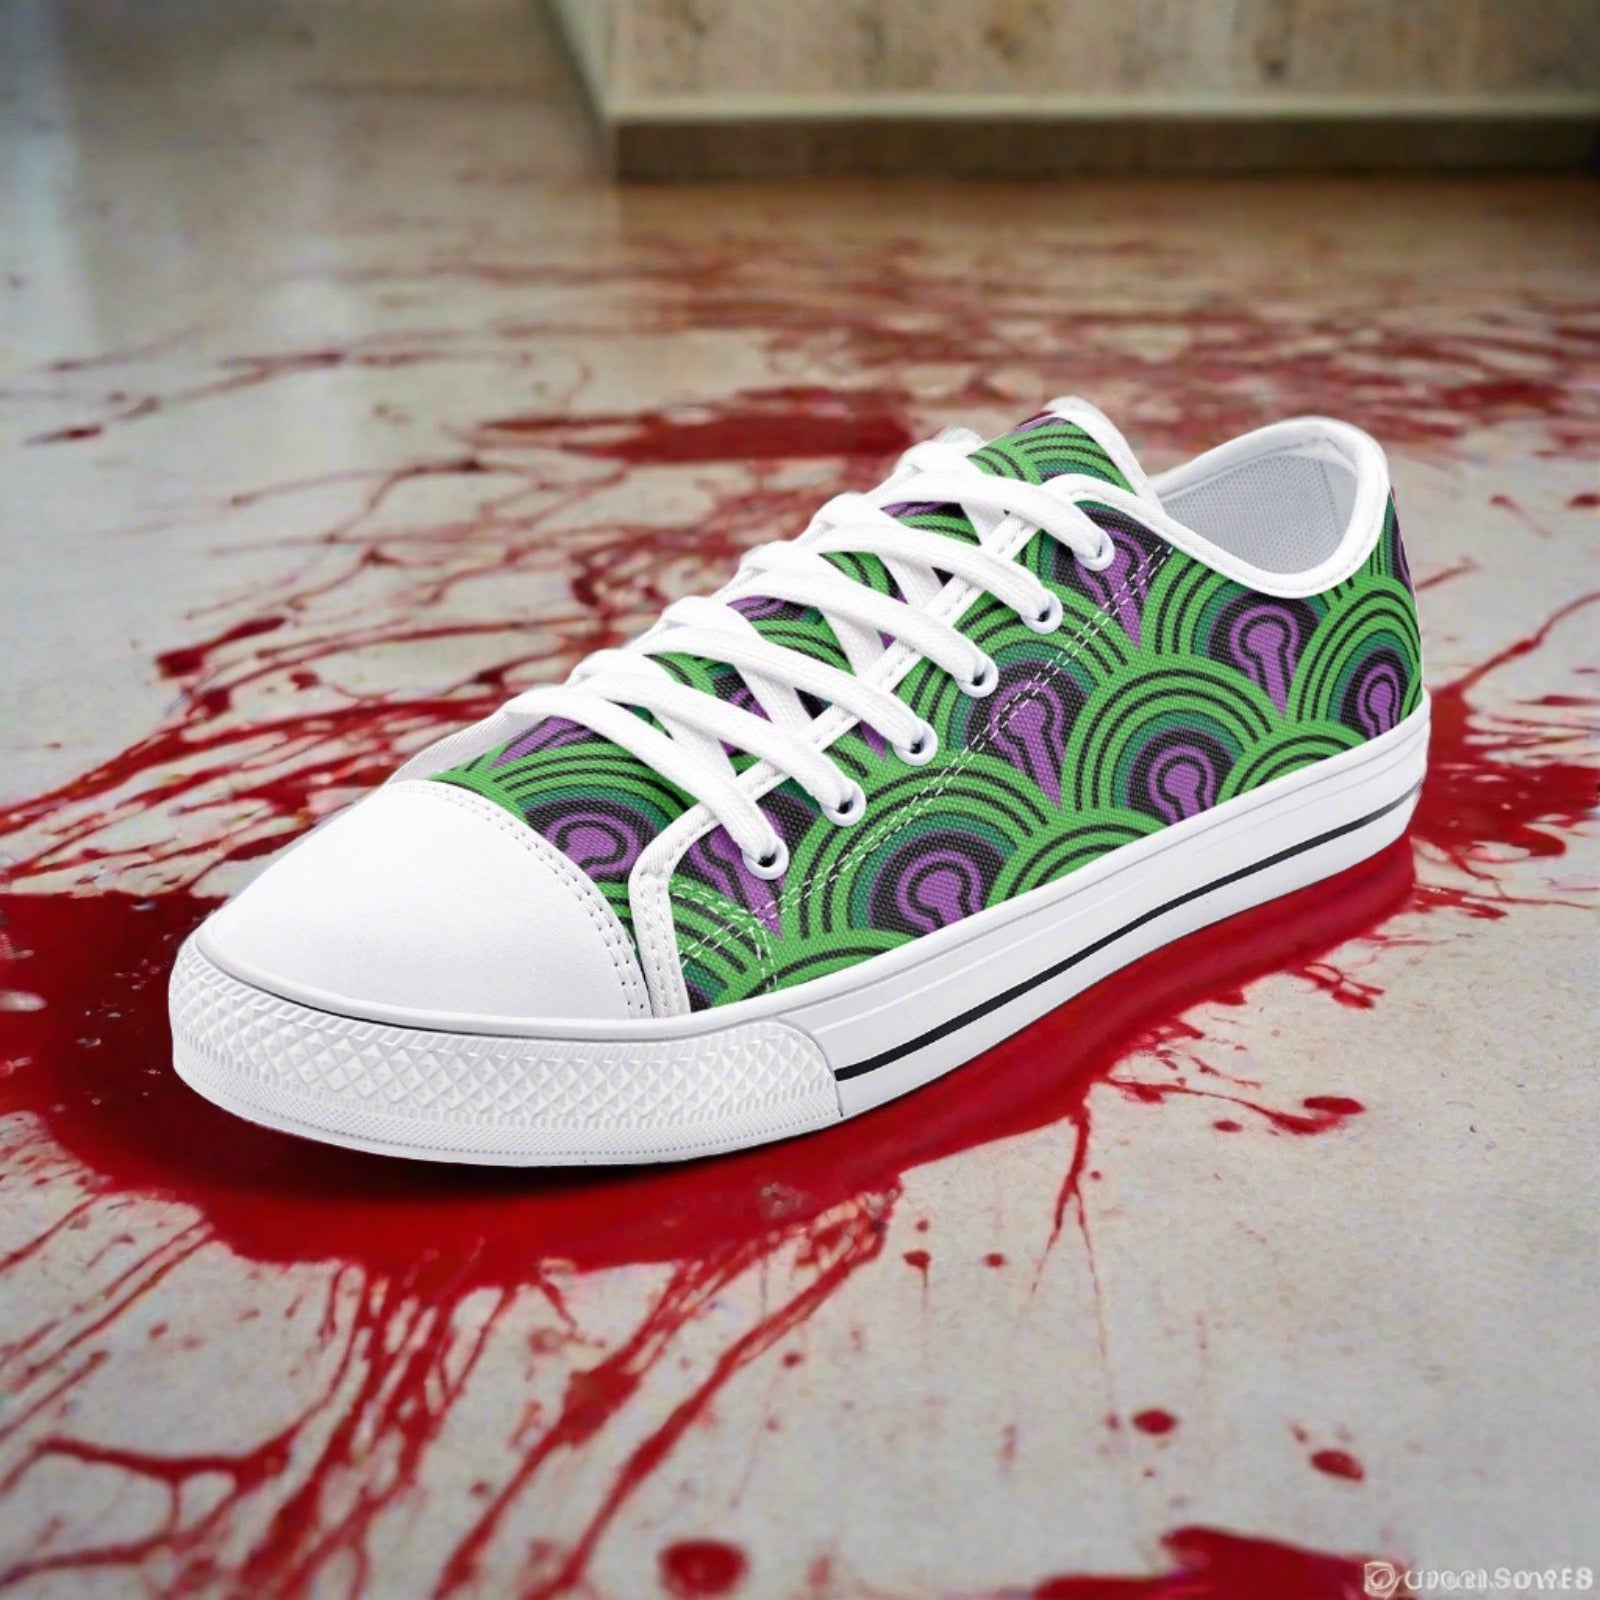 Carpet Pattern Art - Freaky Shoes®